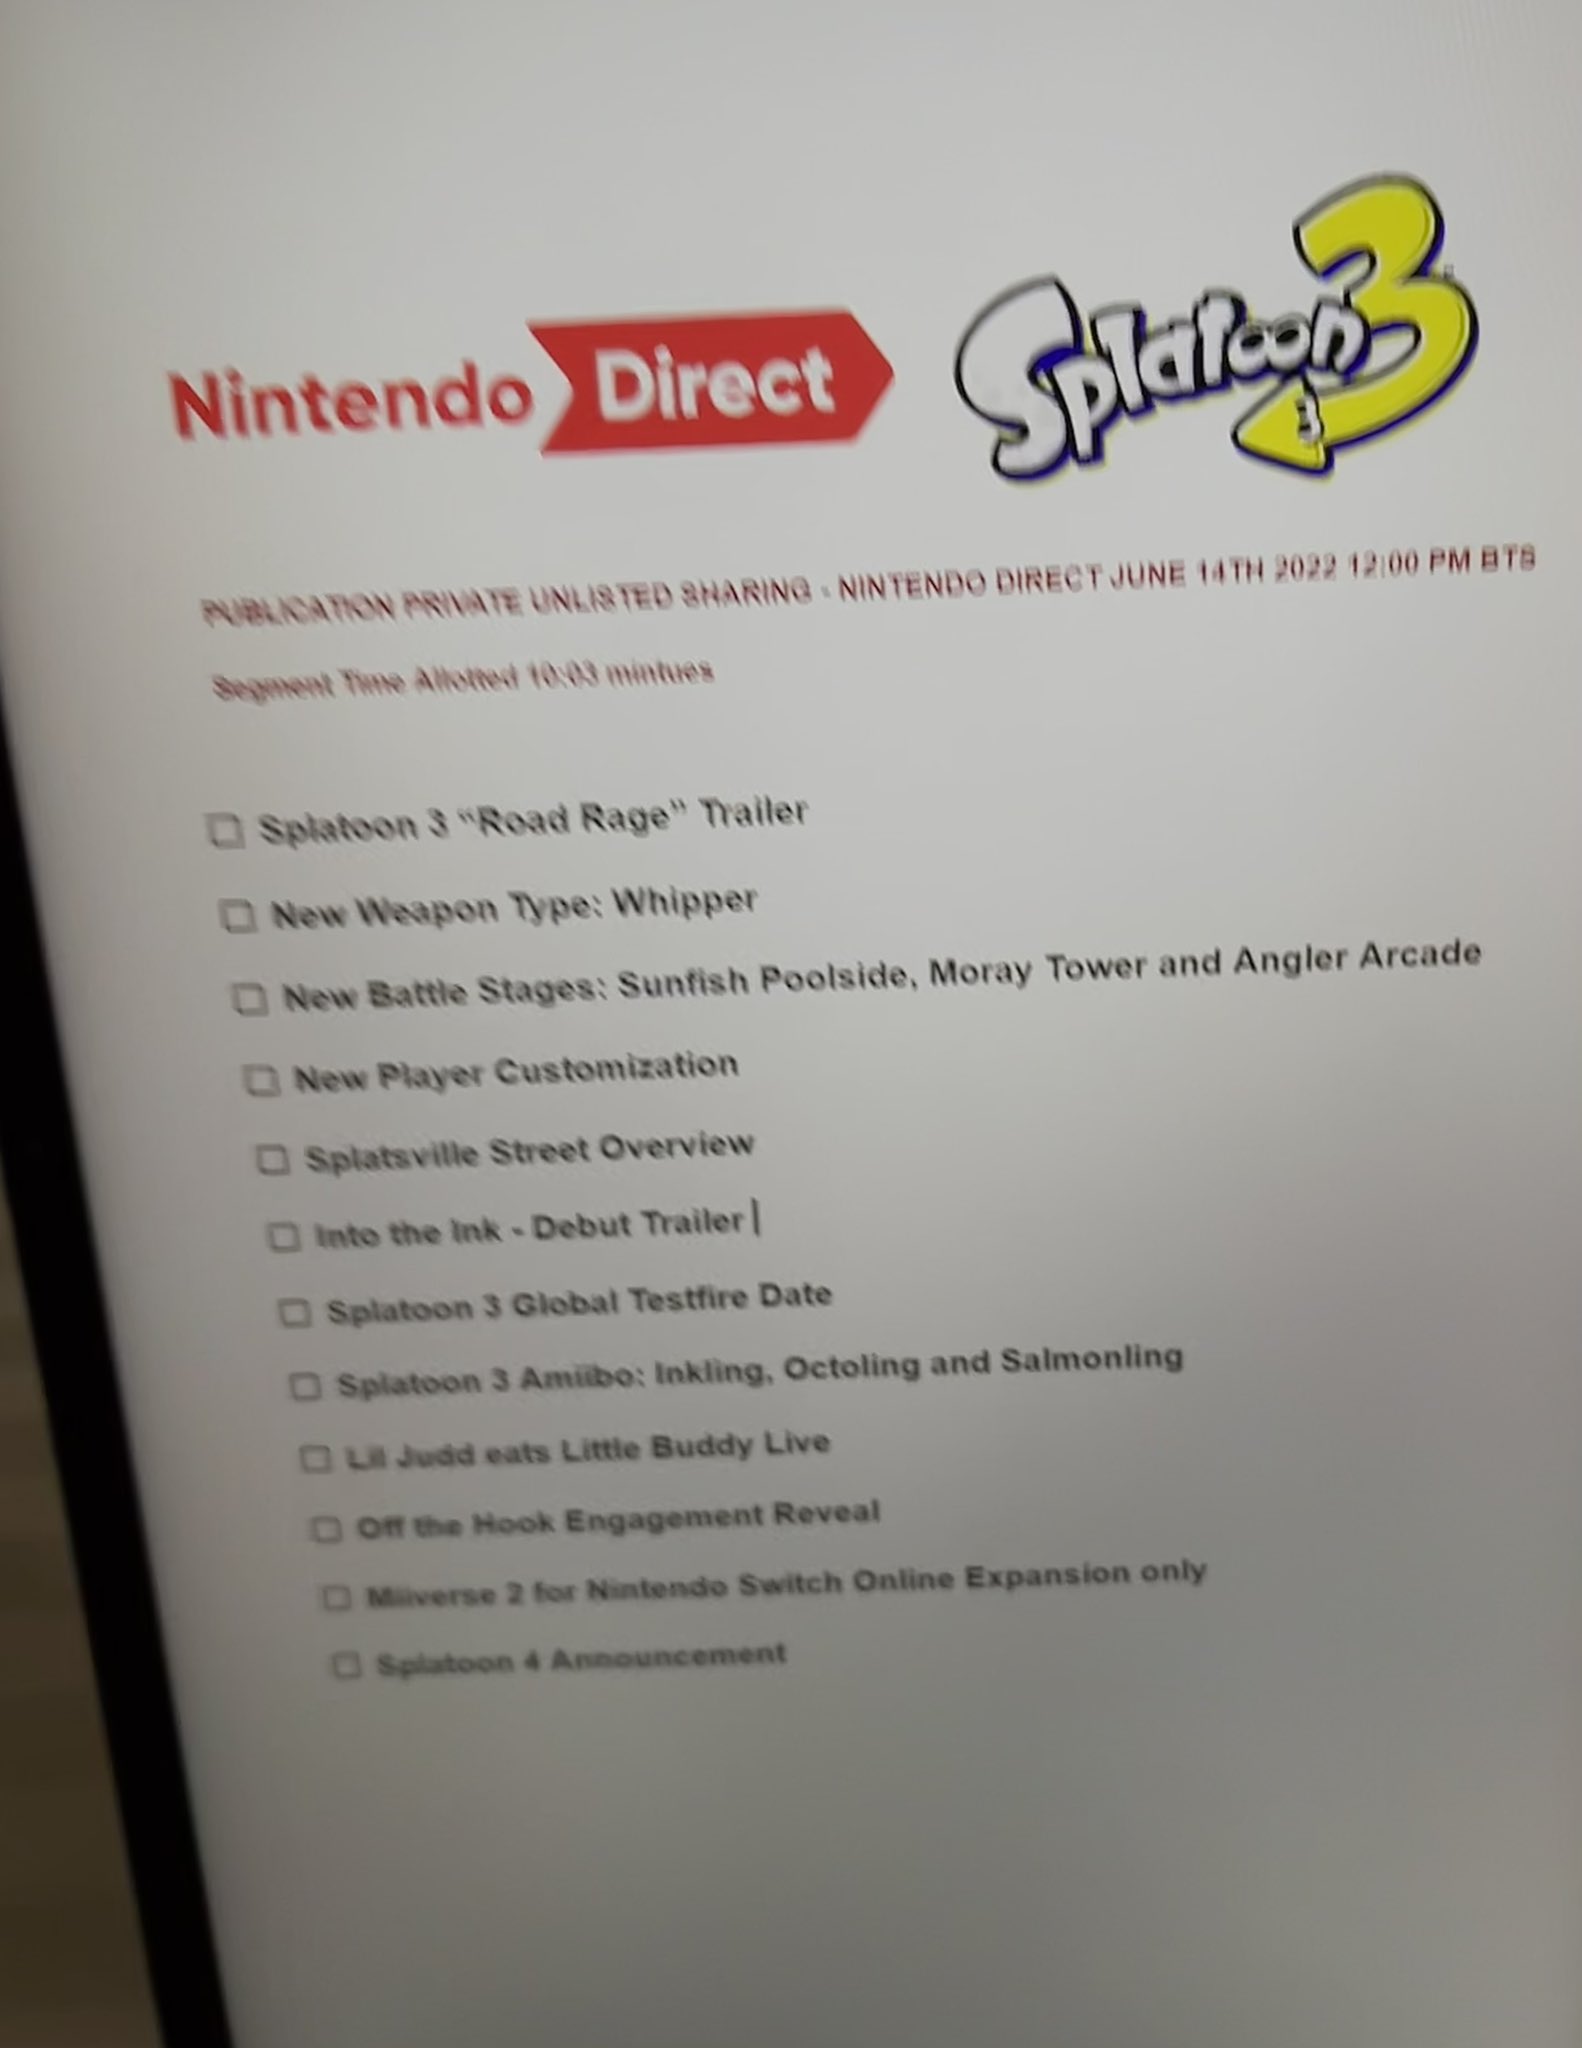 Nintendo direct leak 2022 leaked 